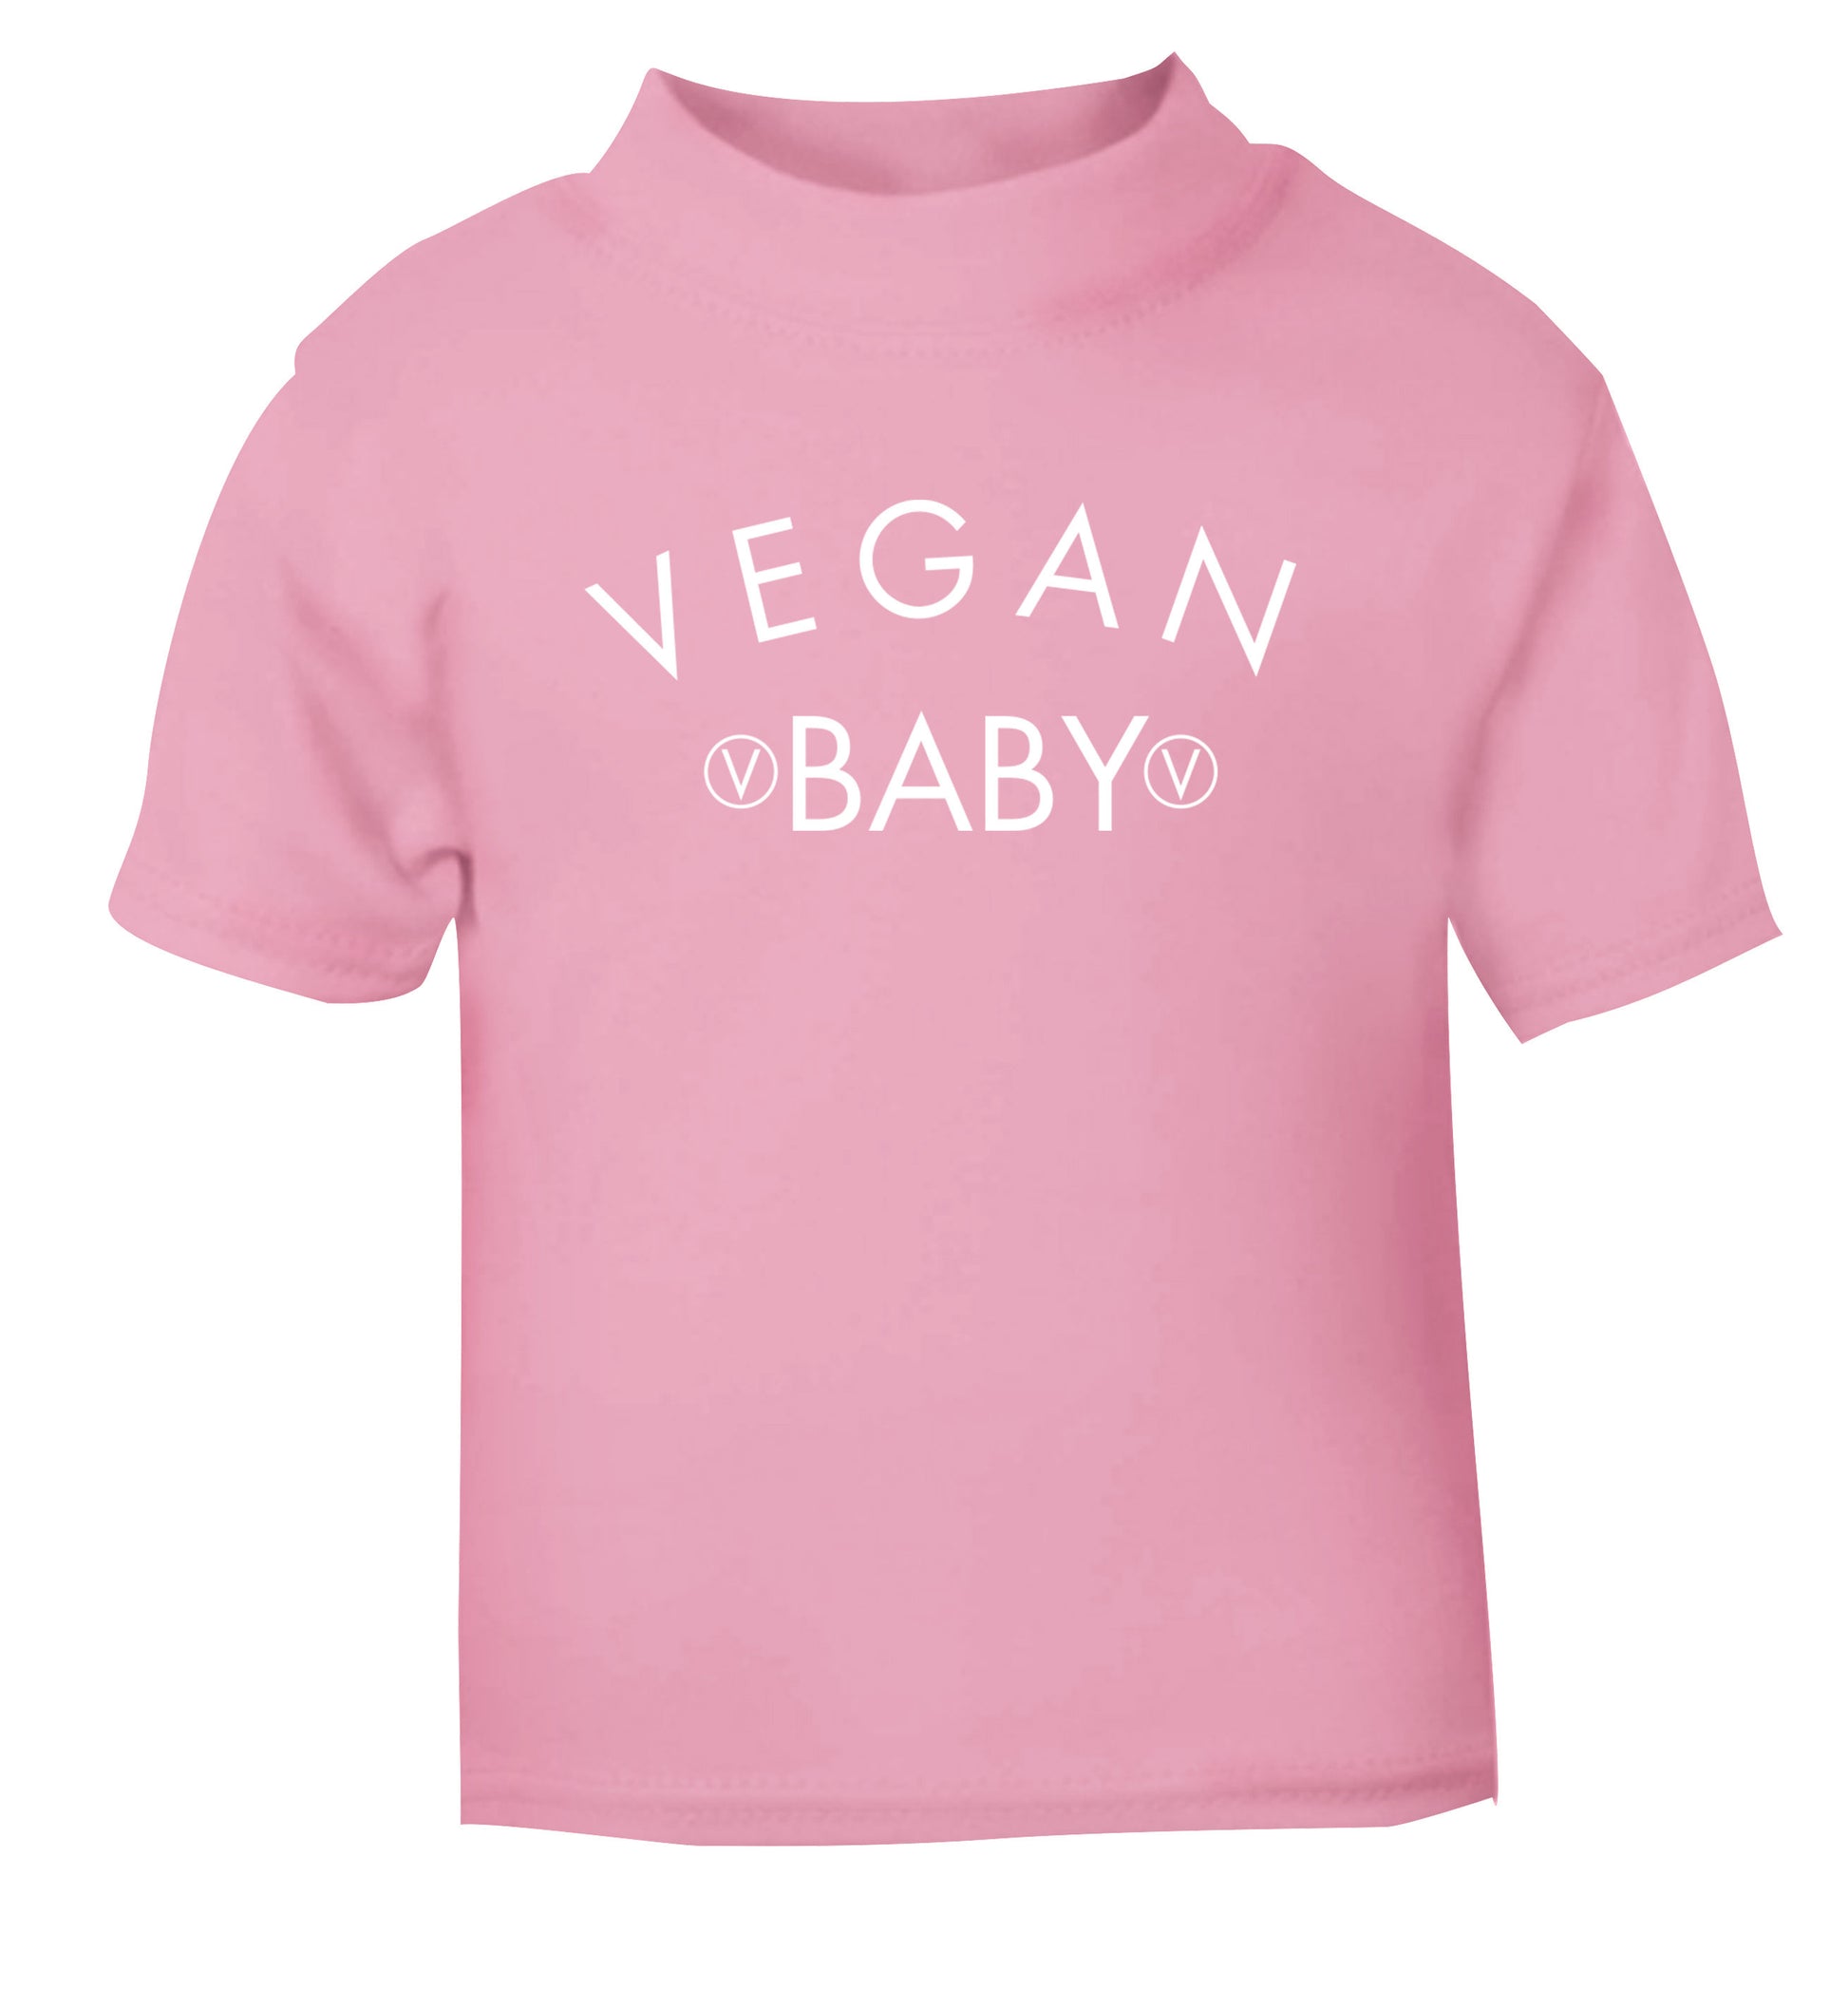 Vegan baby light pink Baby Toddler Tshirt 2 Years